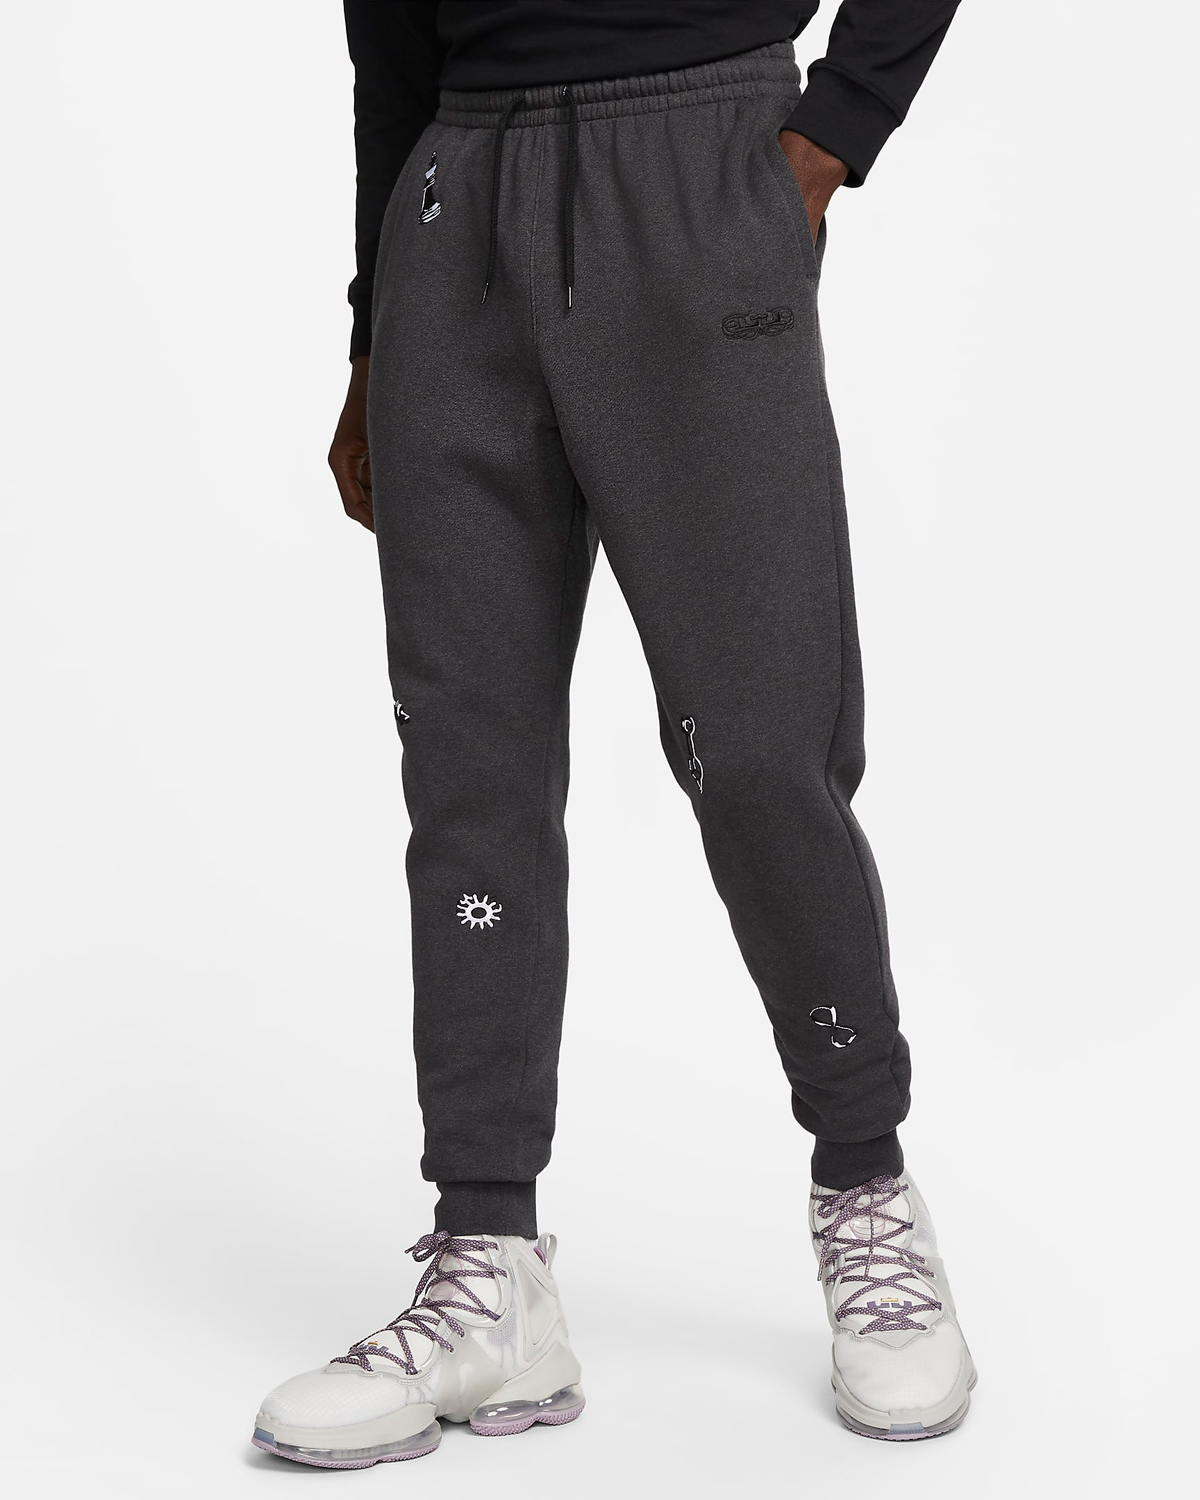 Nike-LeBron-20-Pants-Black-1